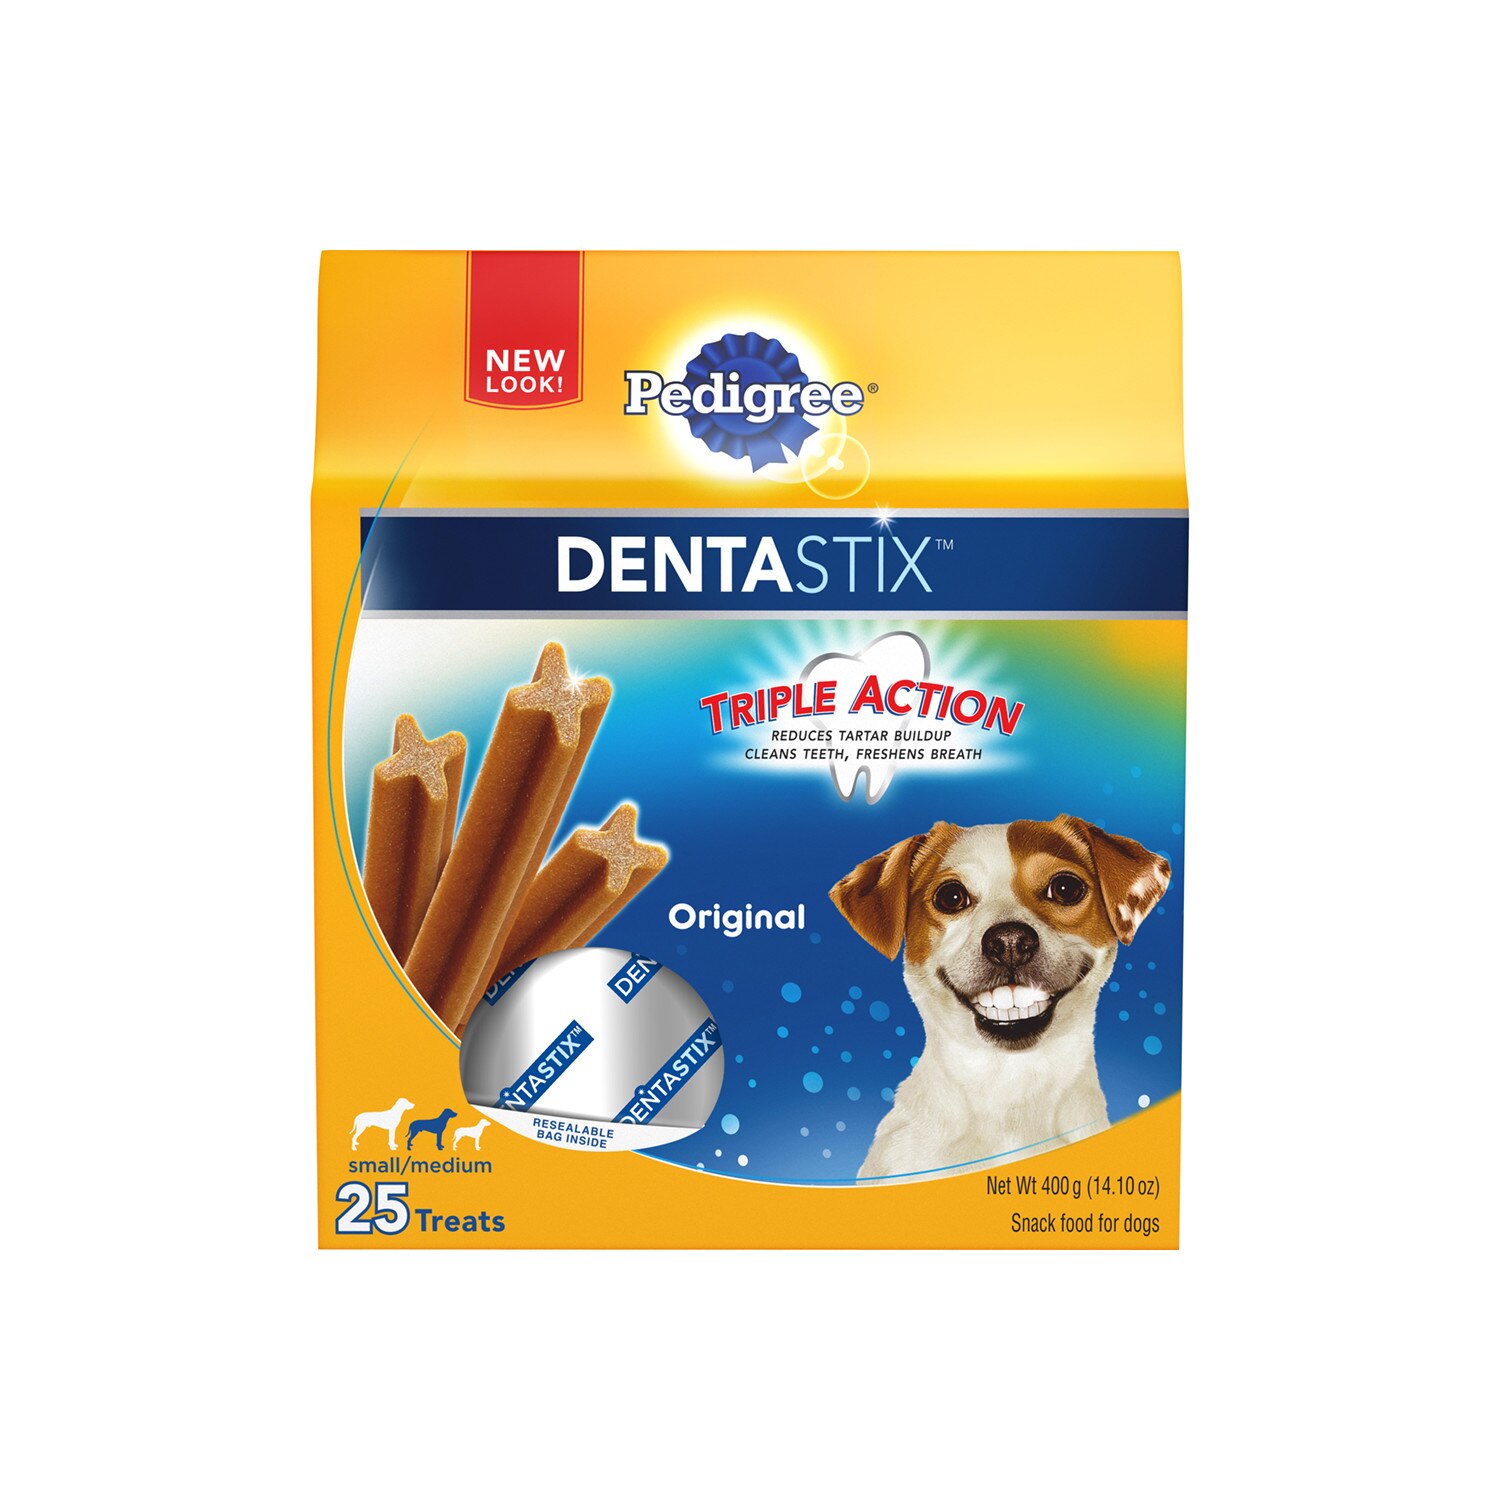 Pedigree Dentastix Original Small/Medium Treats for Dogs , 25CT